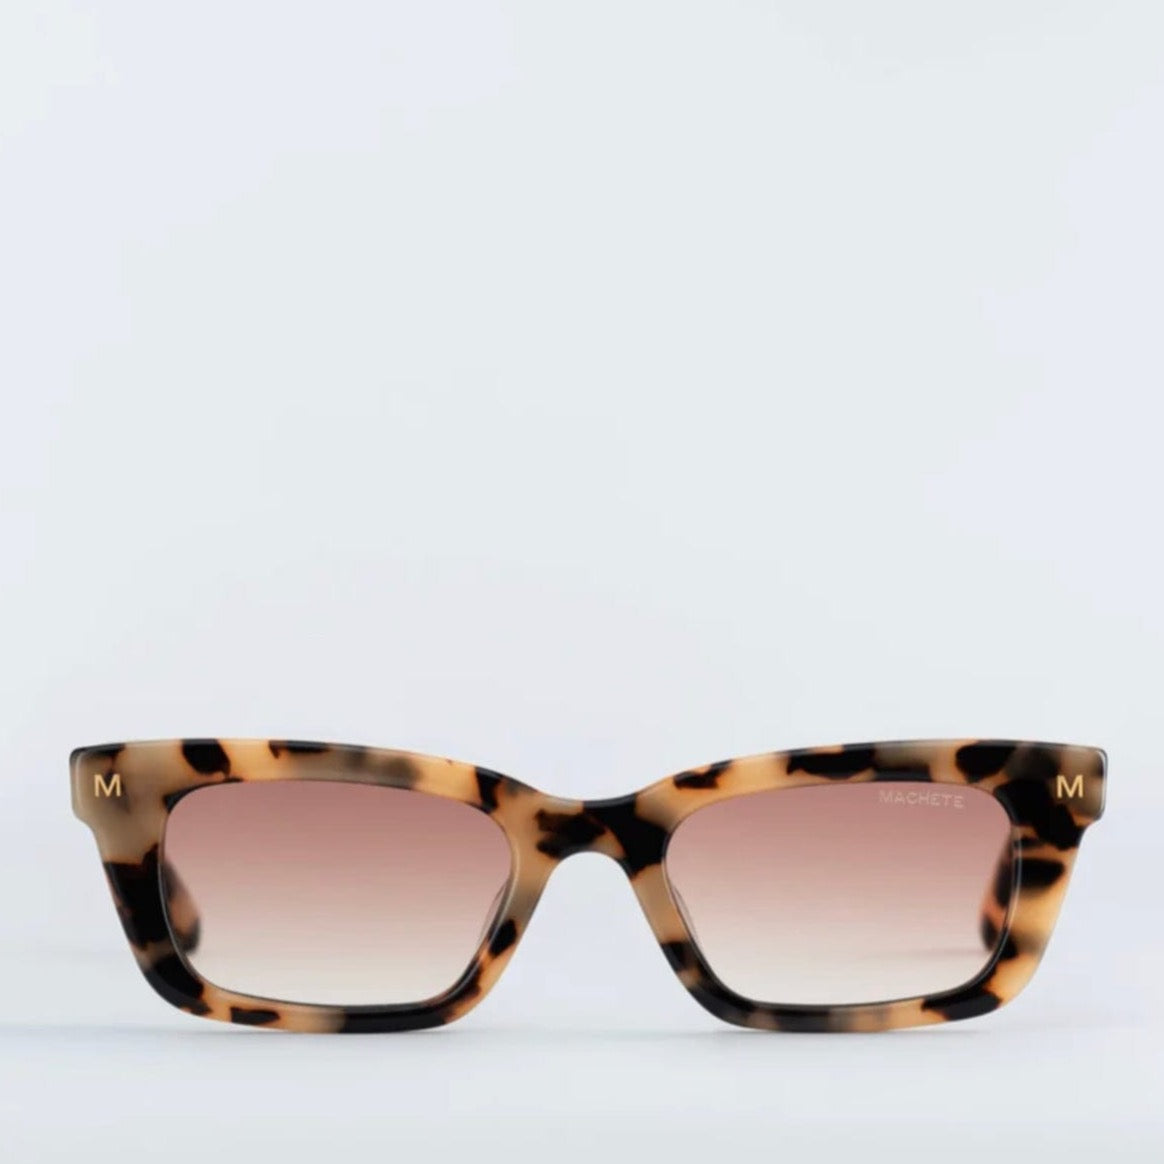 Italian Acetate Sunglasses Ruby In Blonde Tortoise by Machete